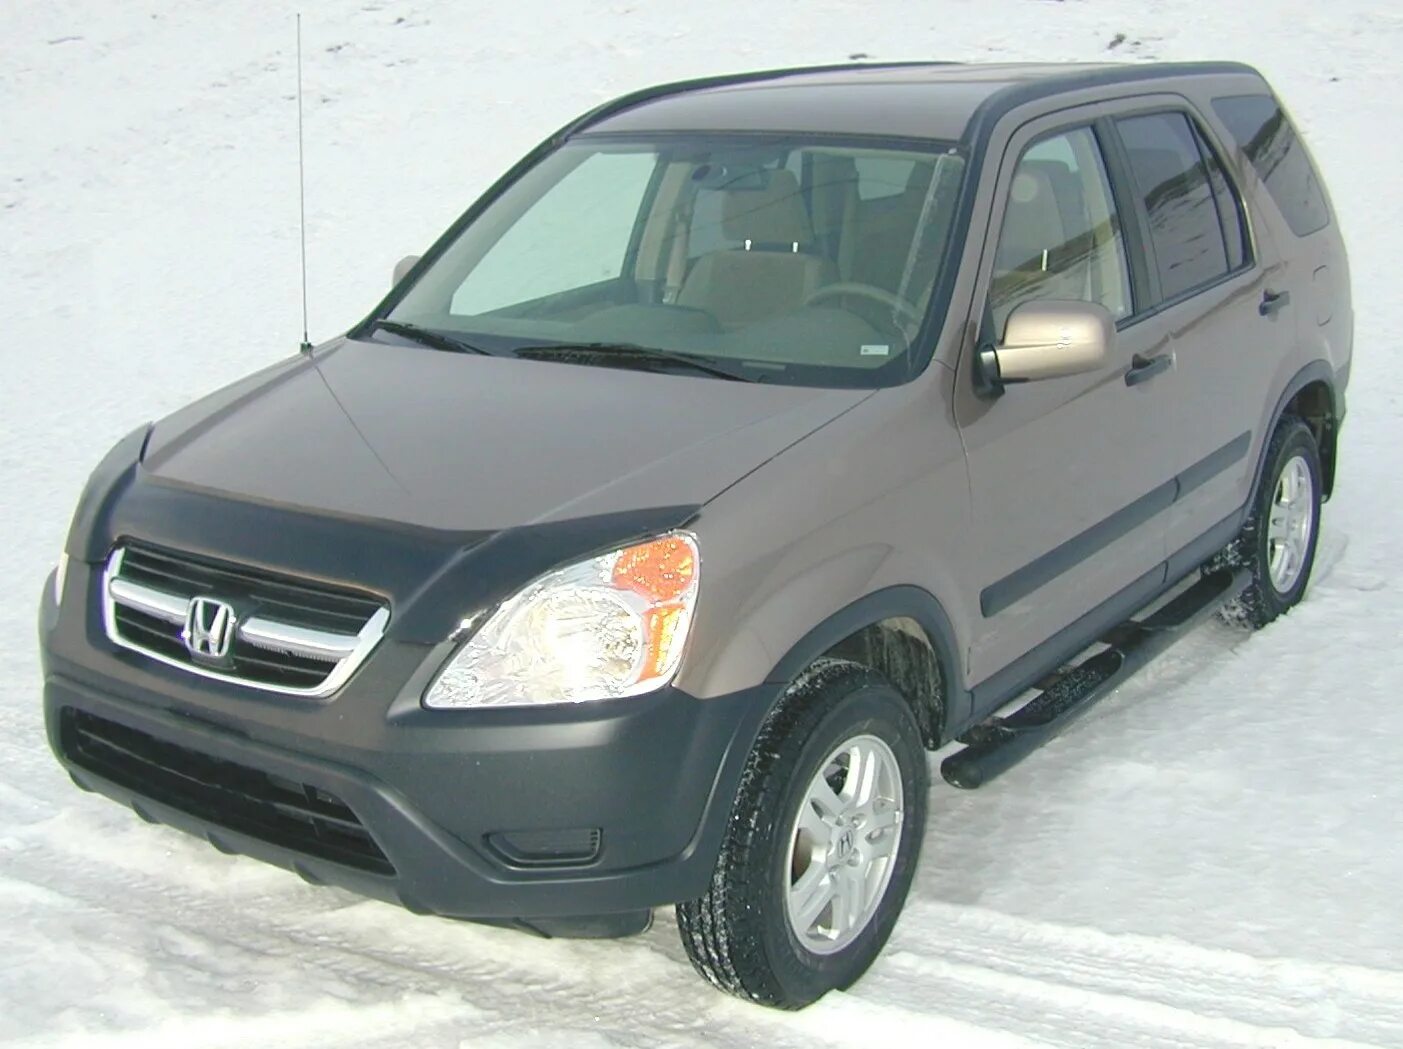 Honda CR-V 2002-2006. Хонда СРВ 2002. Honda CR-V 2006. Хонда CRV 2006. Honda crv 2006